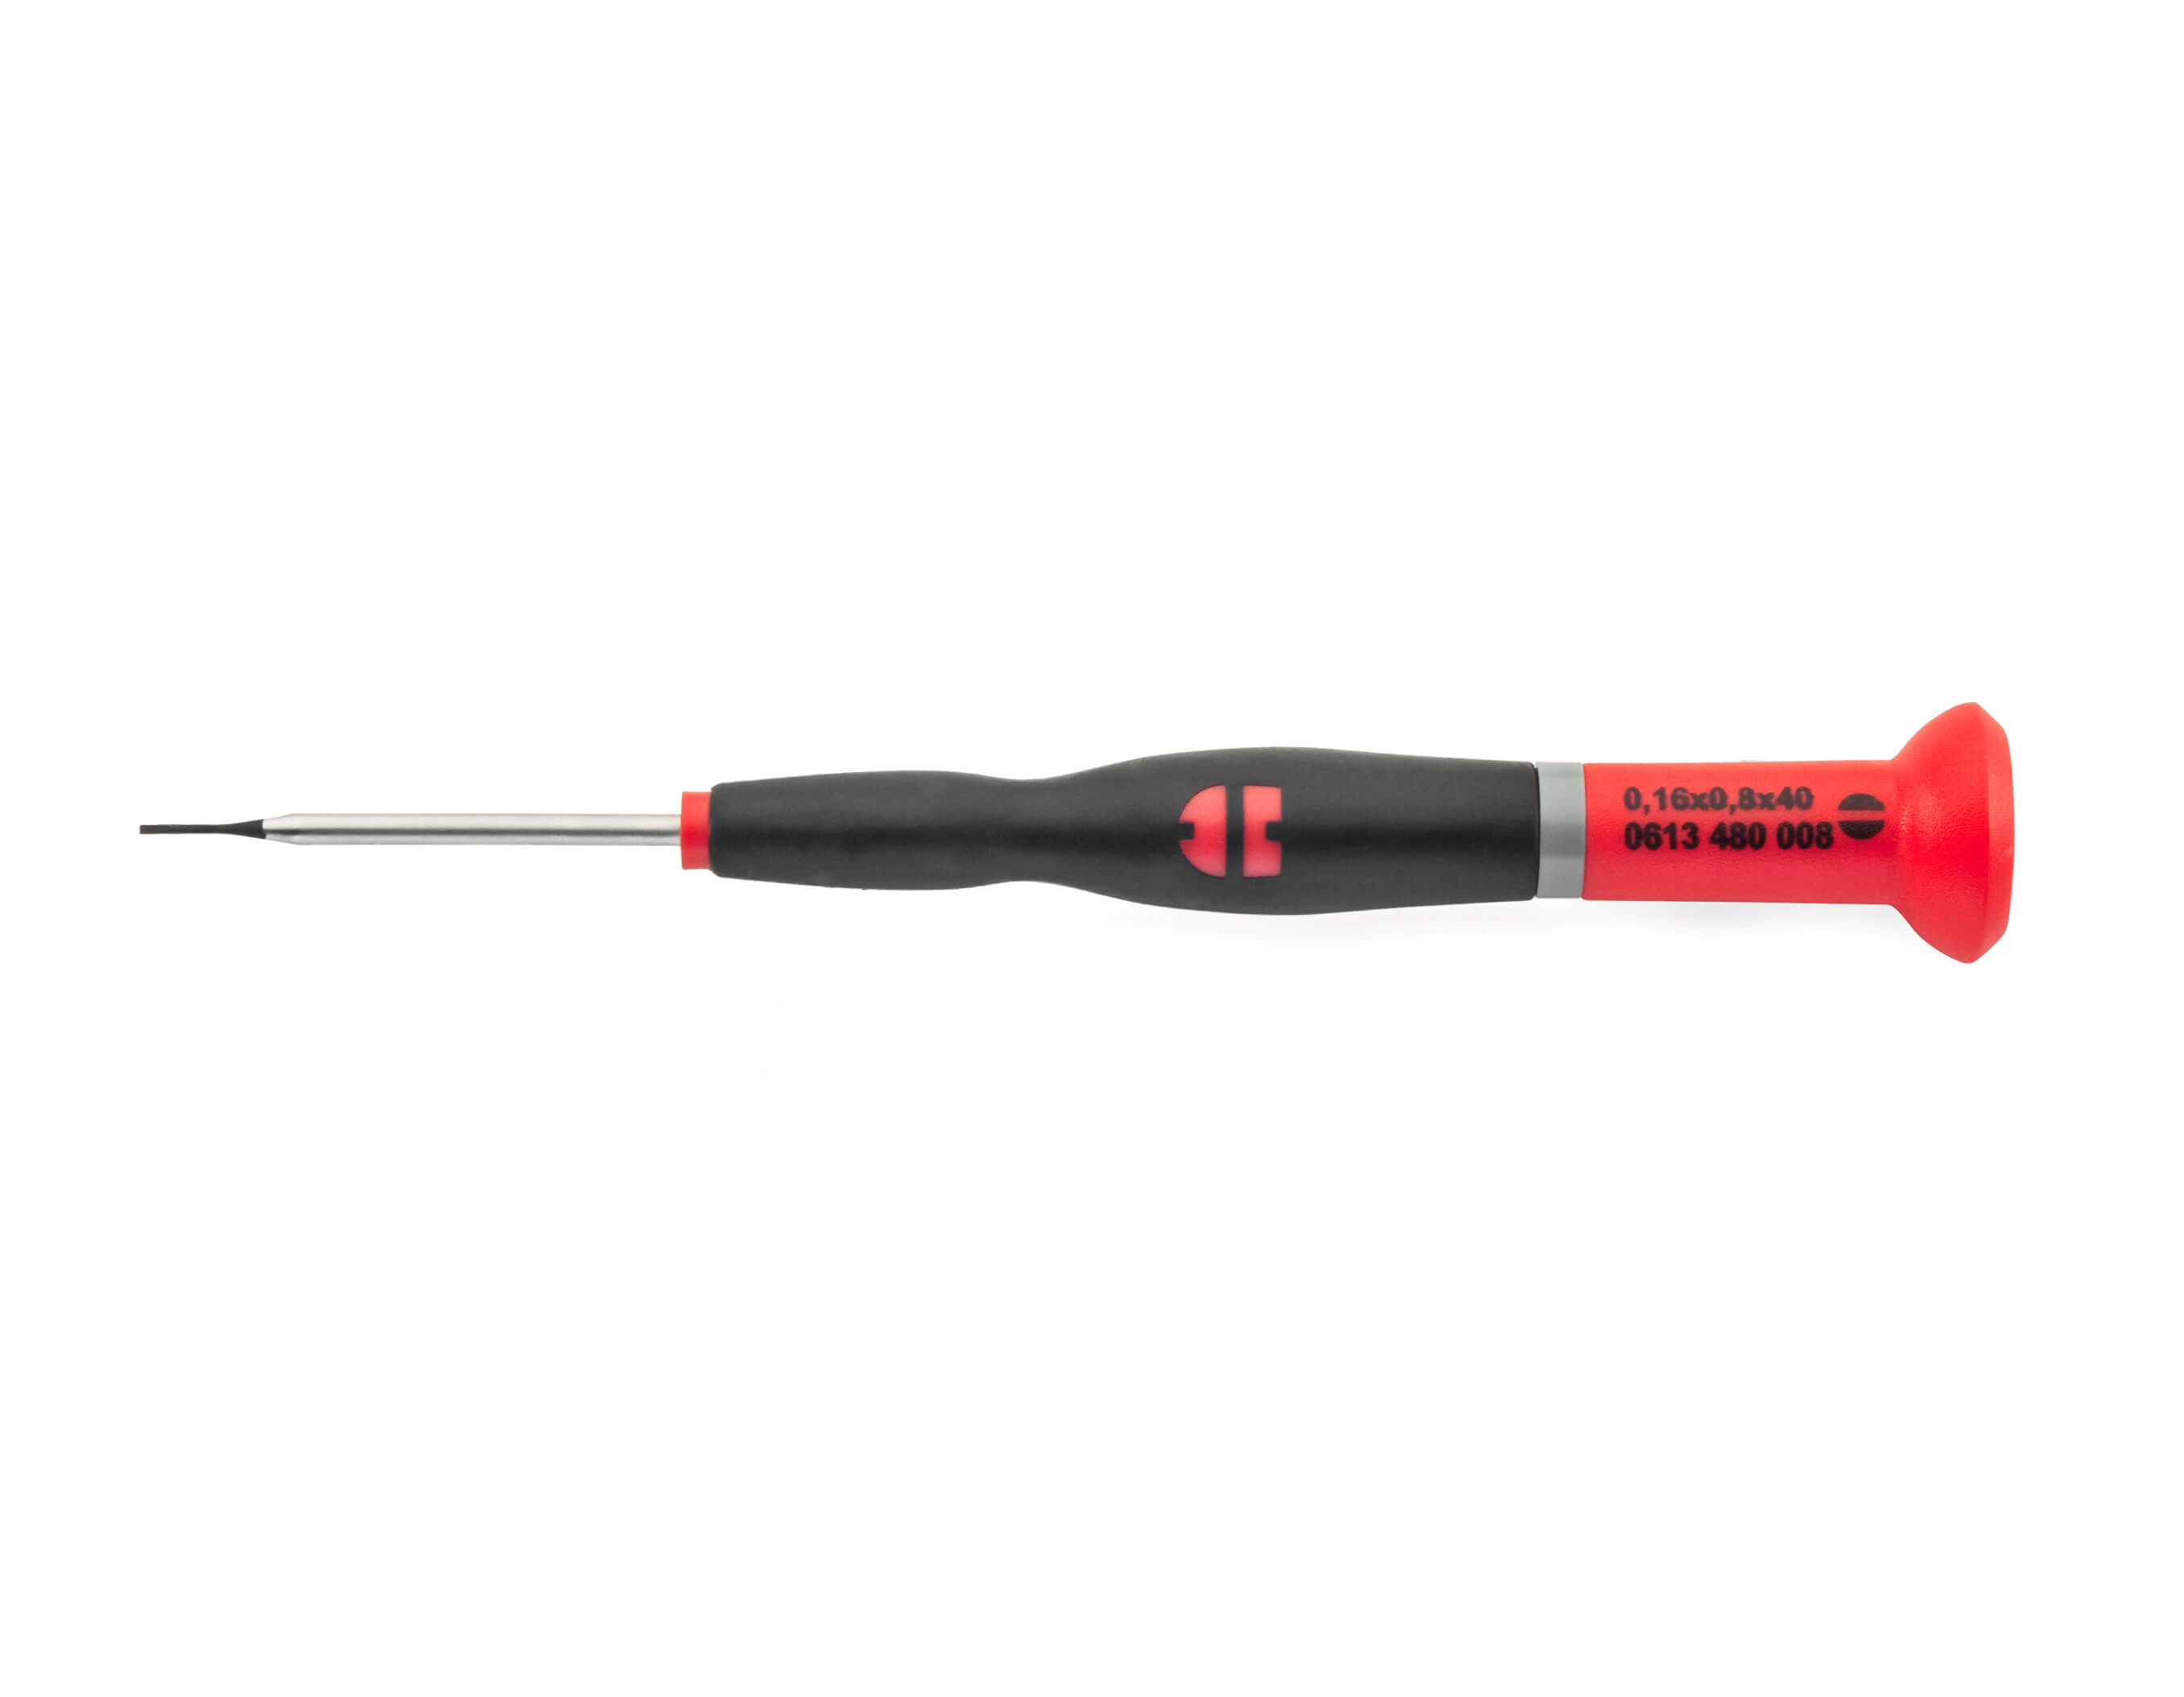 Precision screwdriver slt Blk tip 0.25X1.2X40 -OD